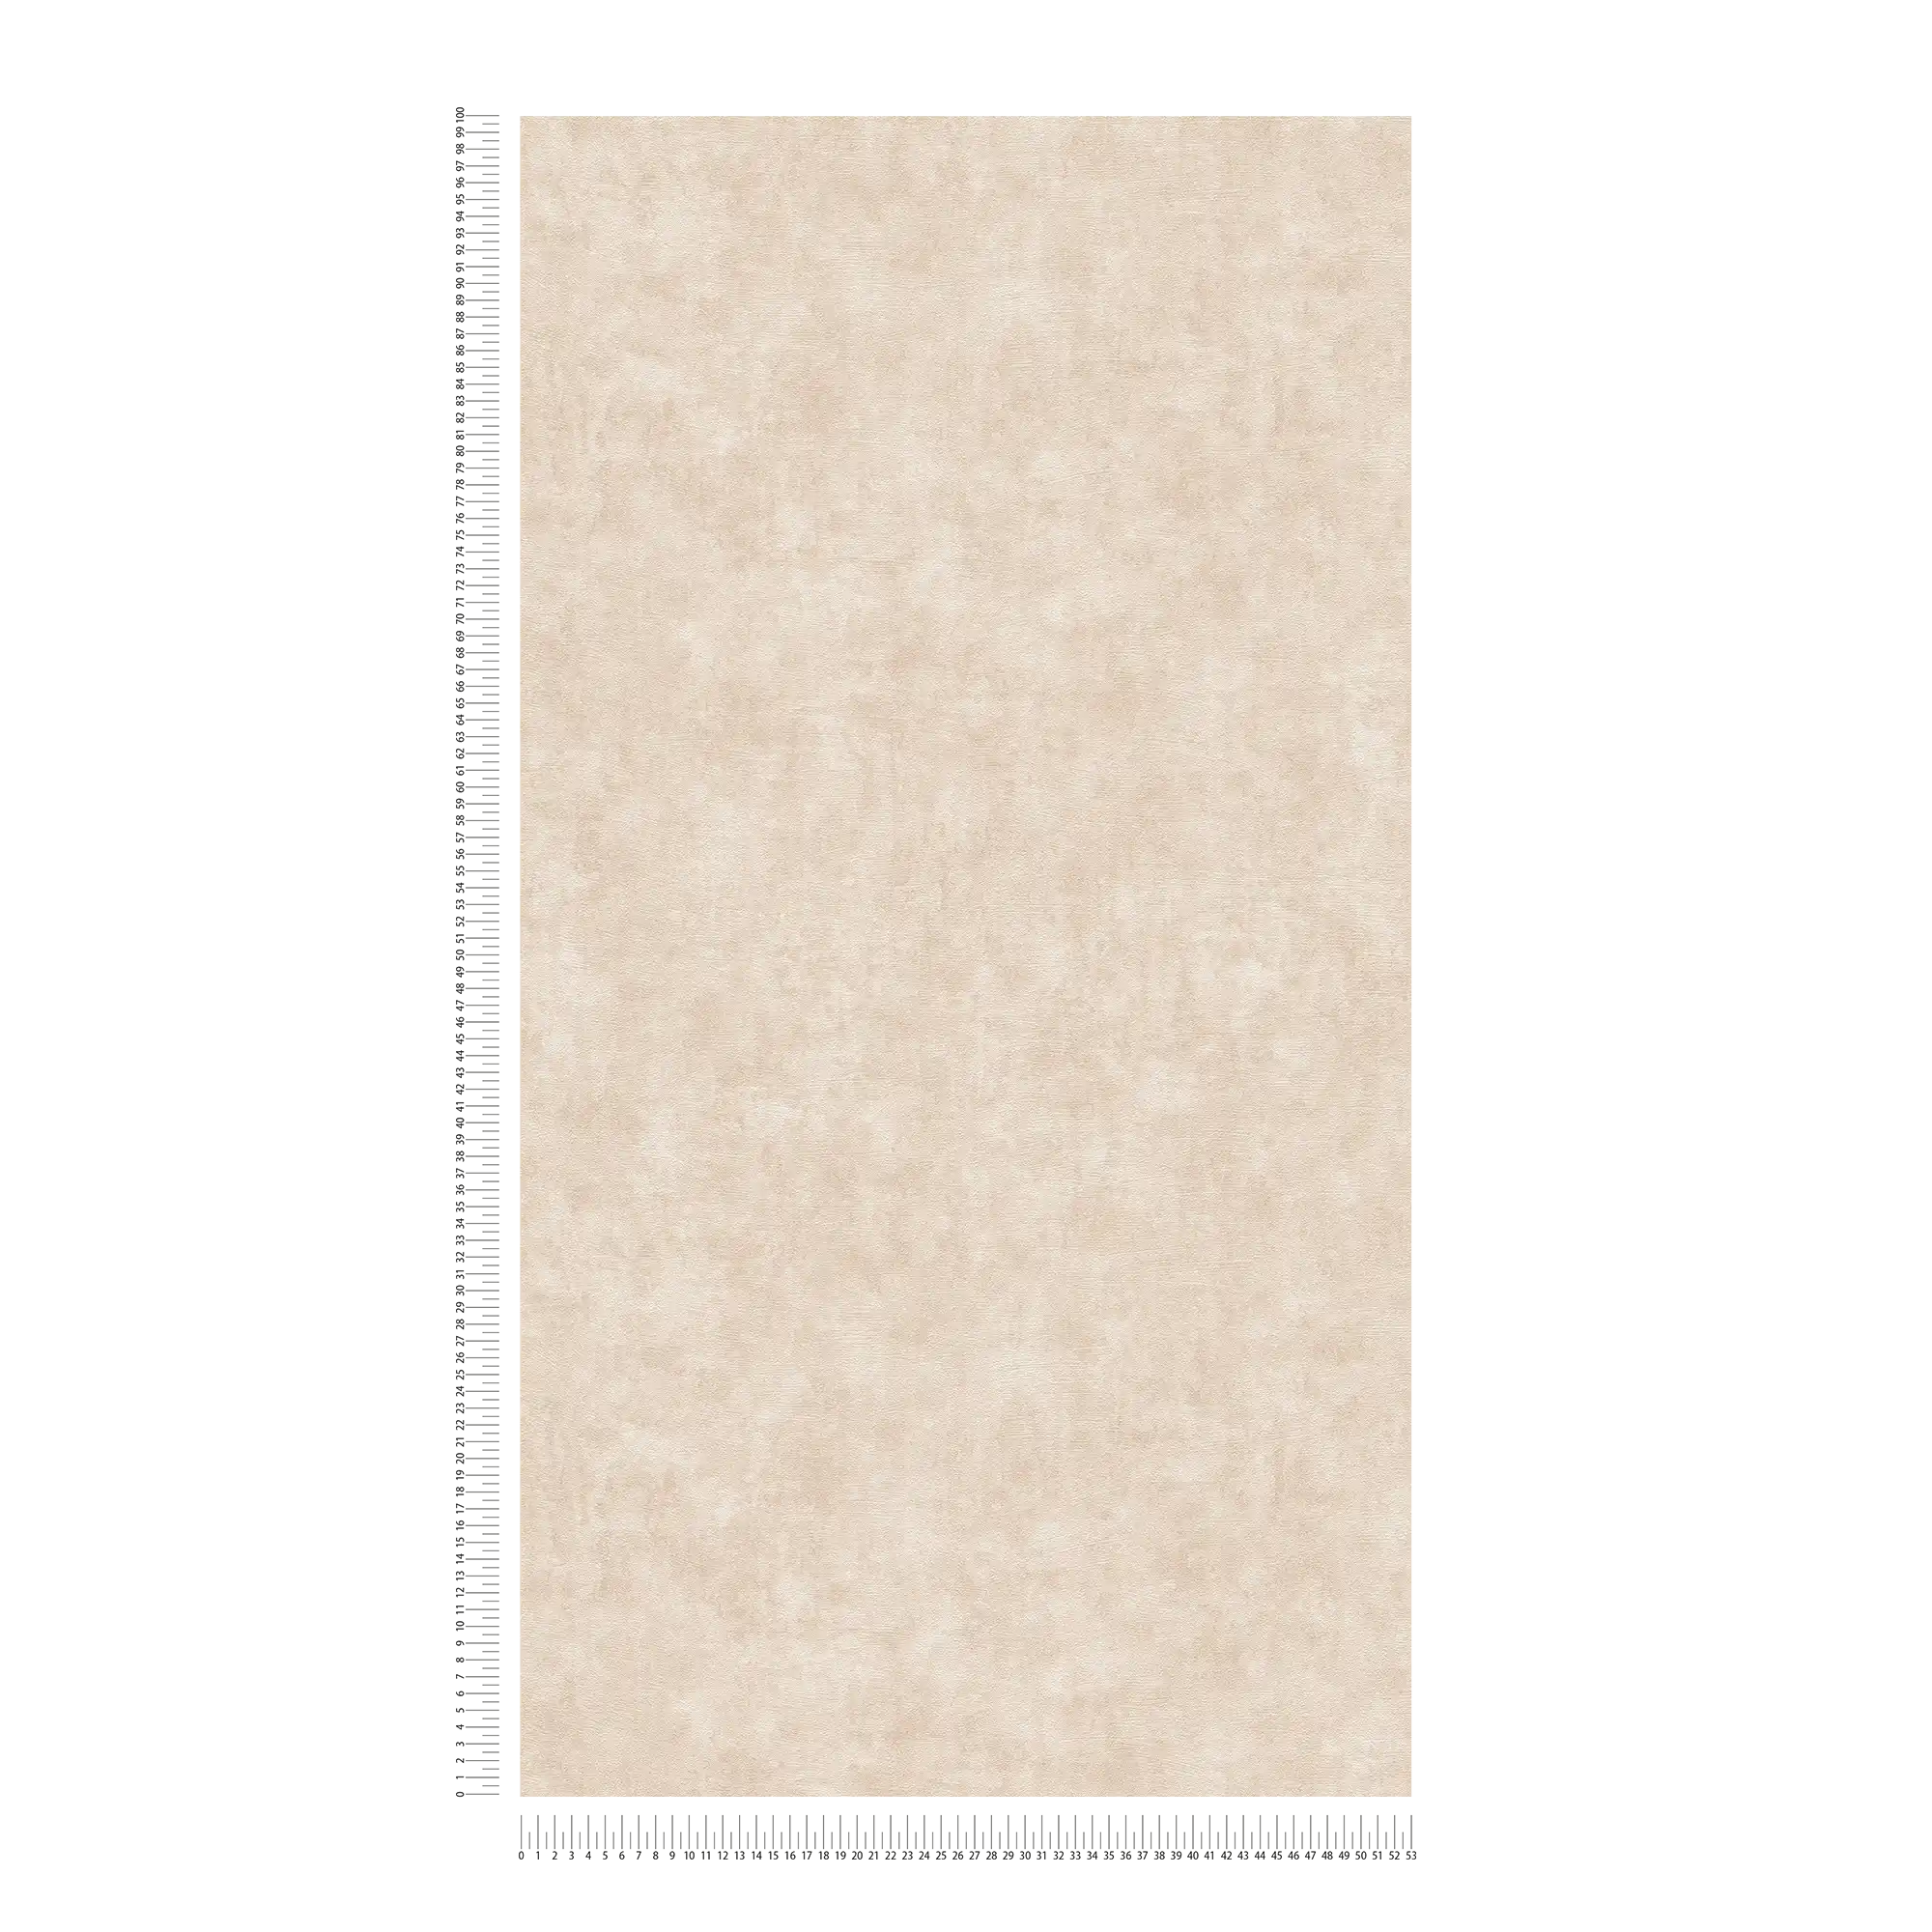             Non-woven wallpaper with textured pattern - beige, cream
        